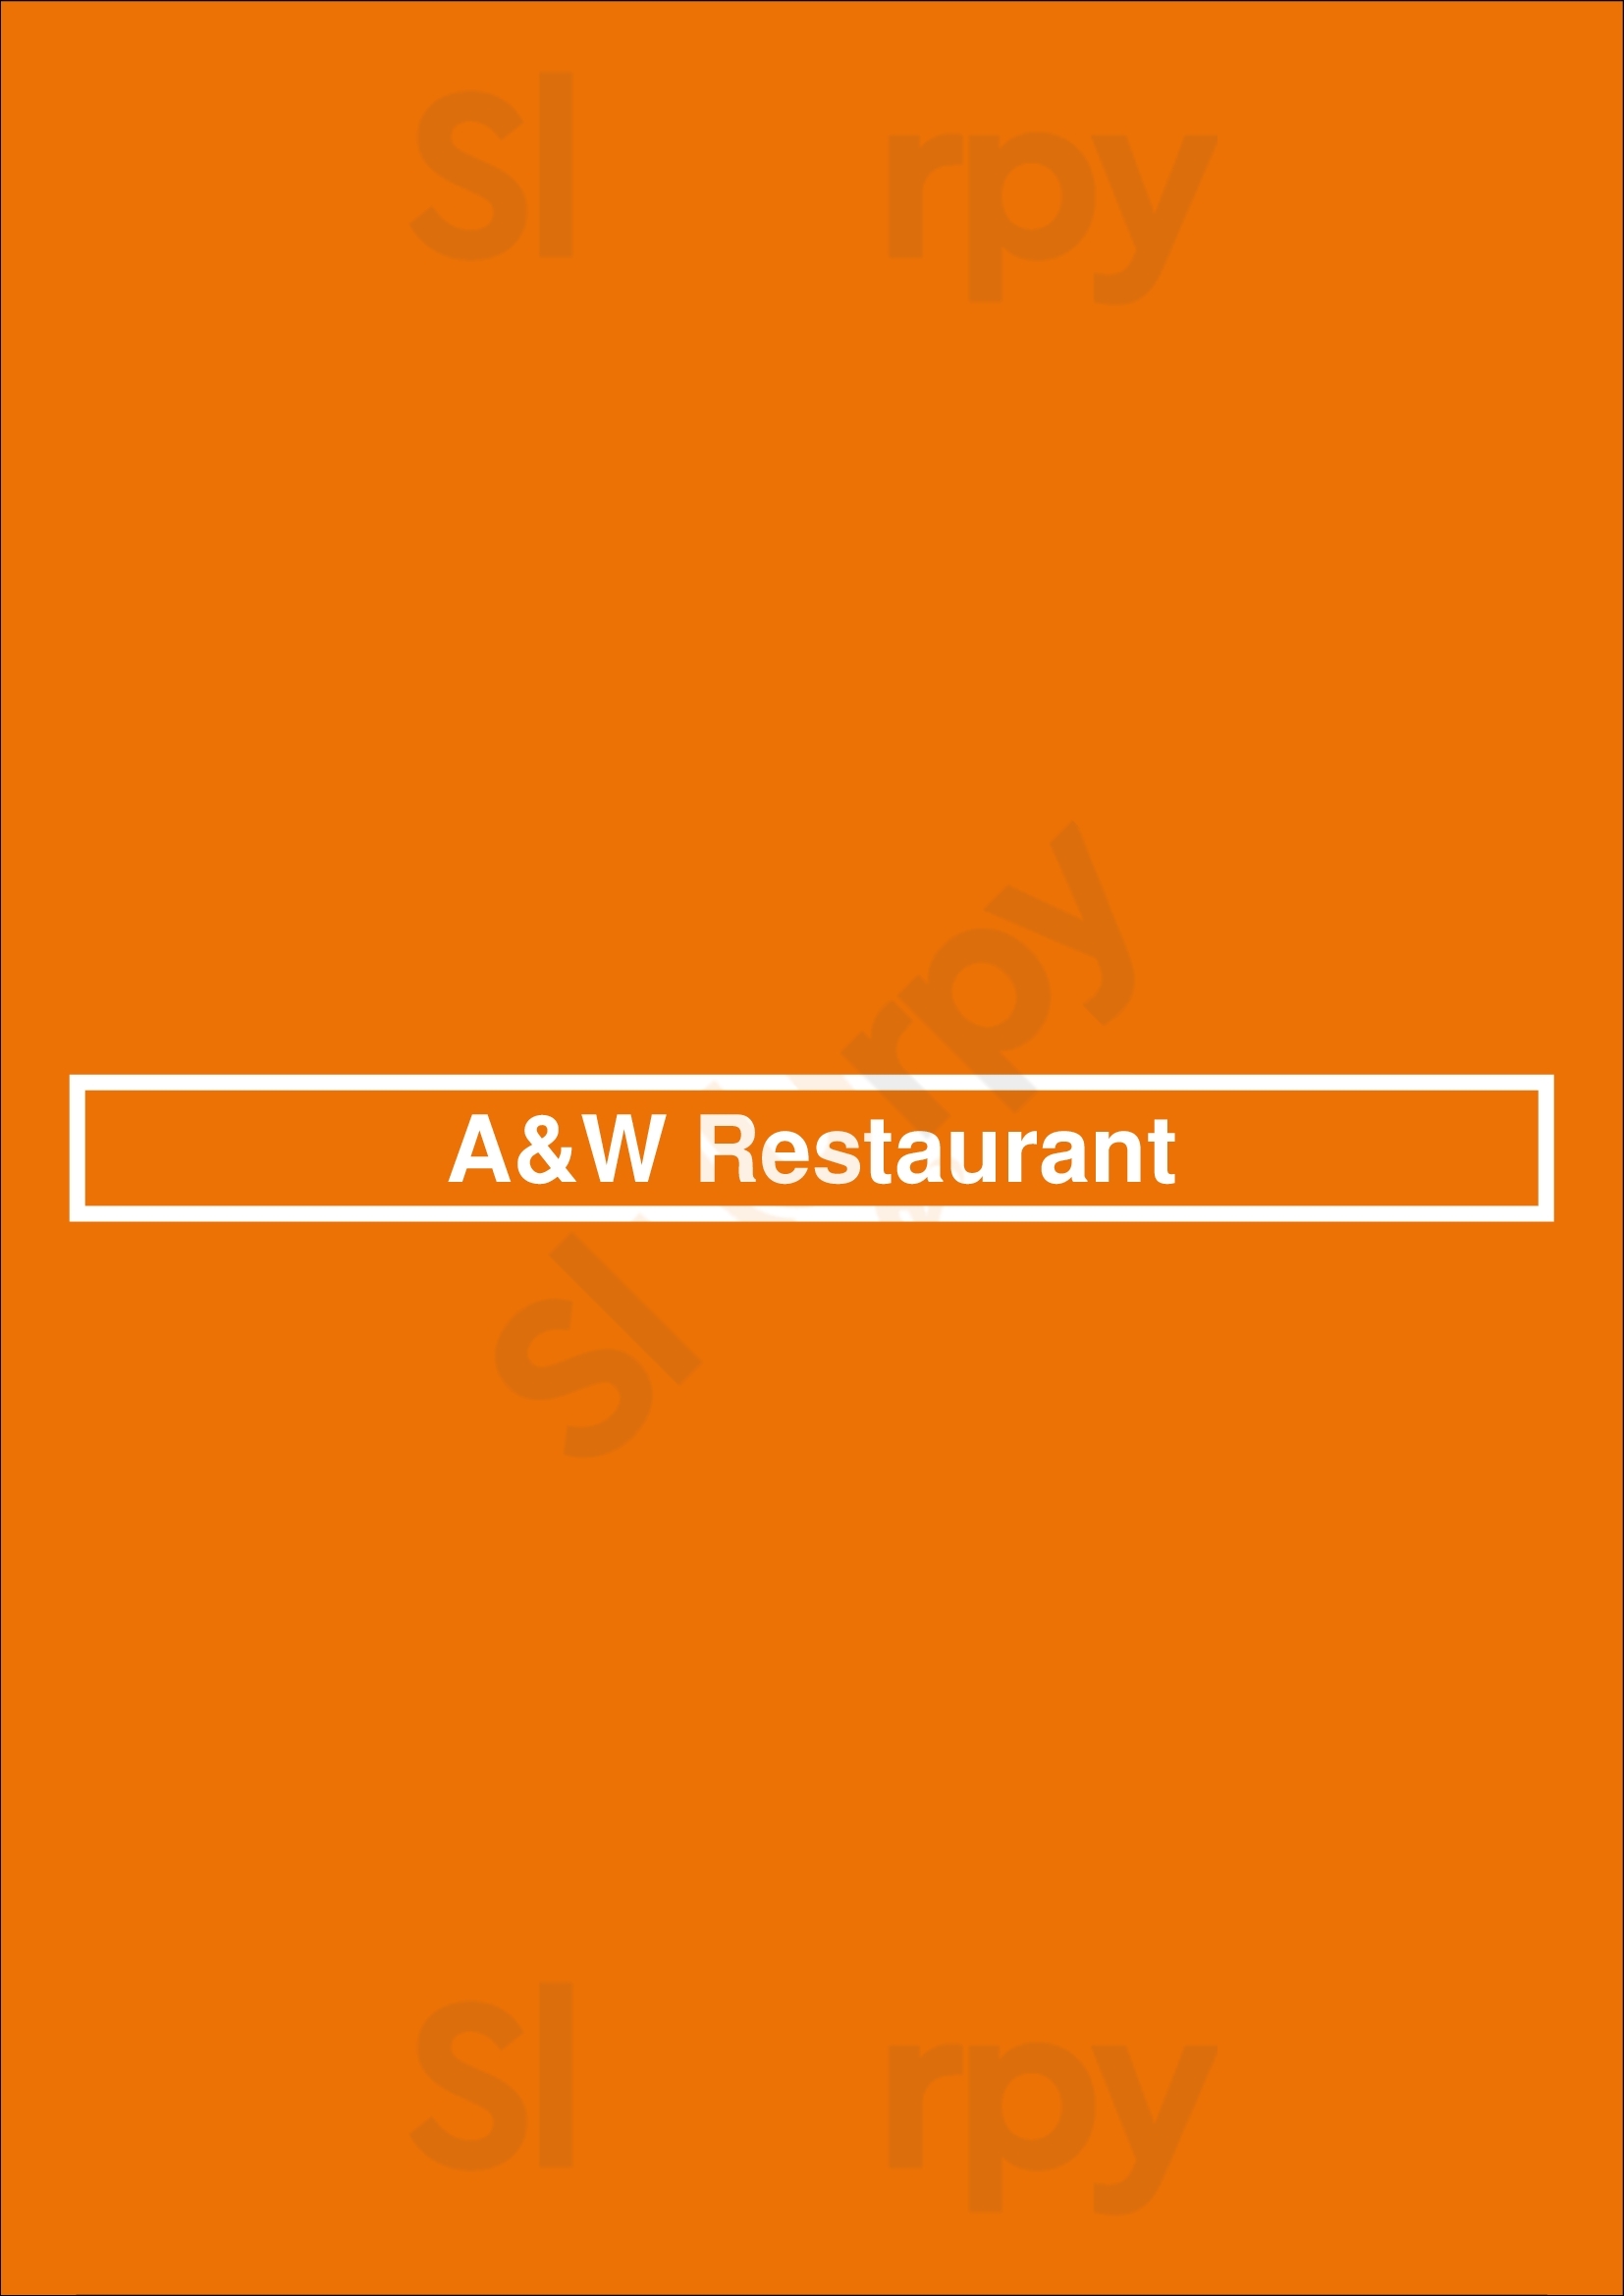 A&w Restaurant Peterborough Menu - 1